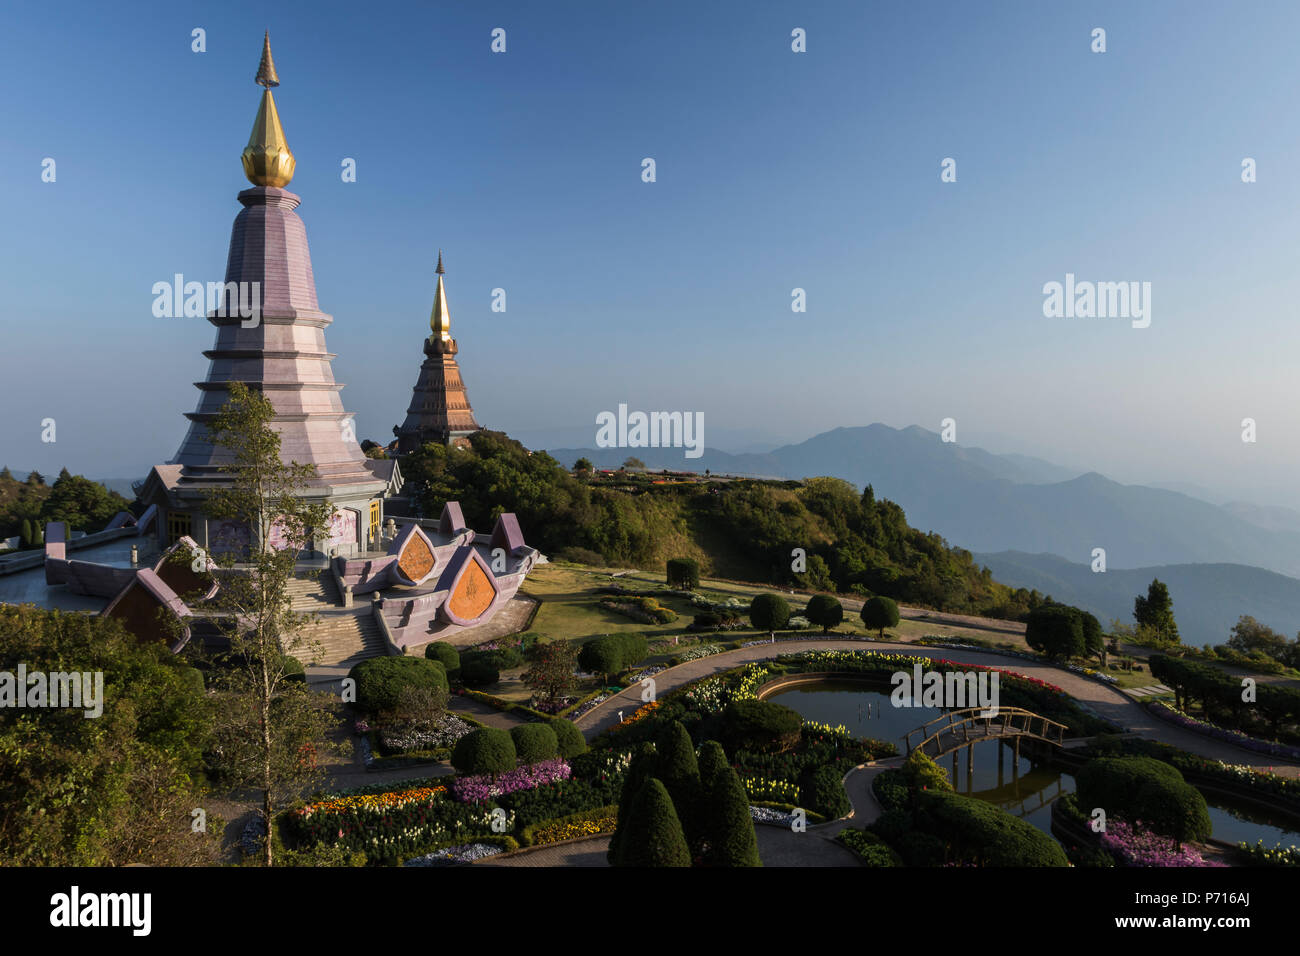 King and Queen Pagodas, Doi Inthanon, Thailand, Southeast Asia, Asia Stock Photo